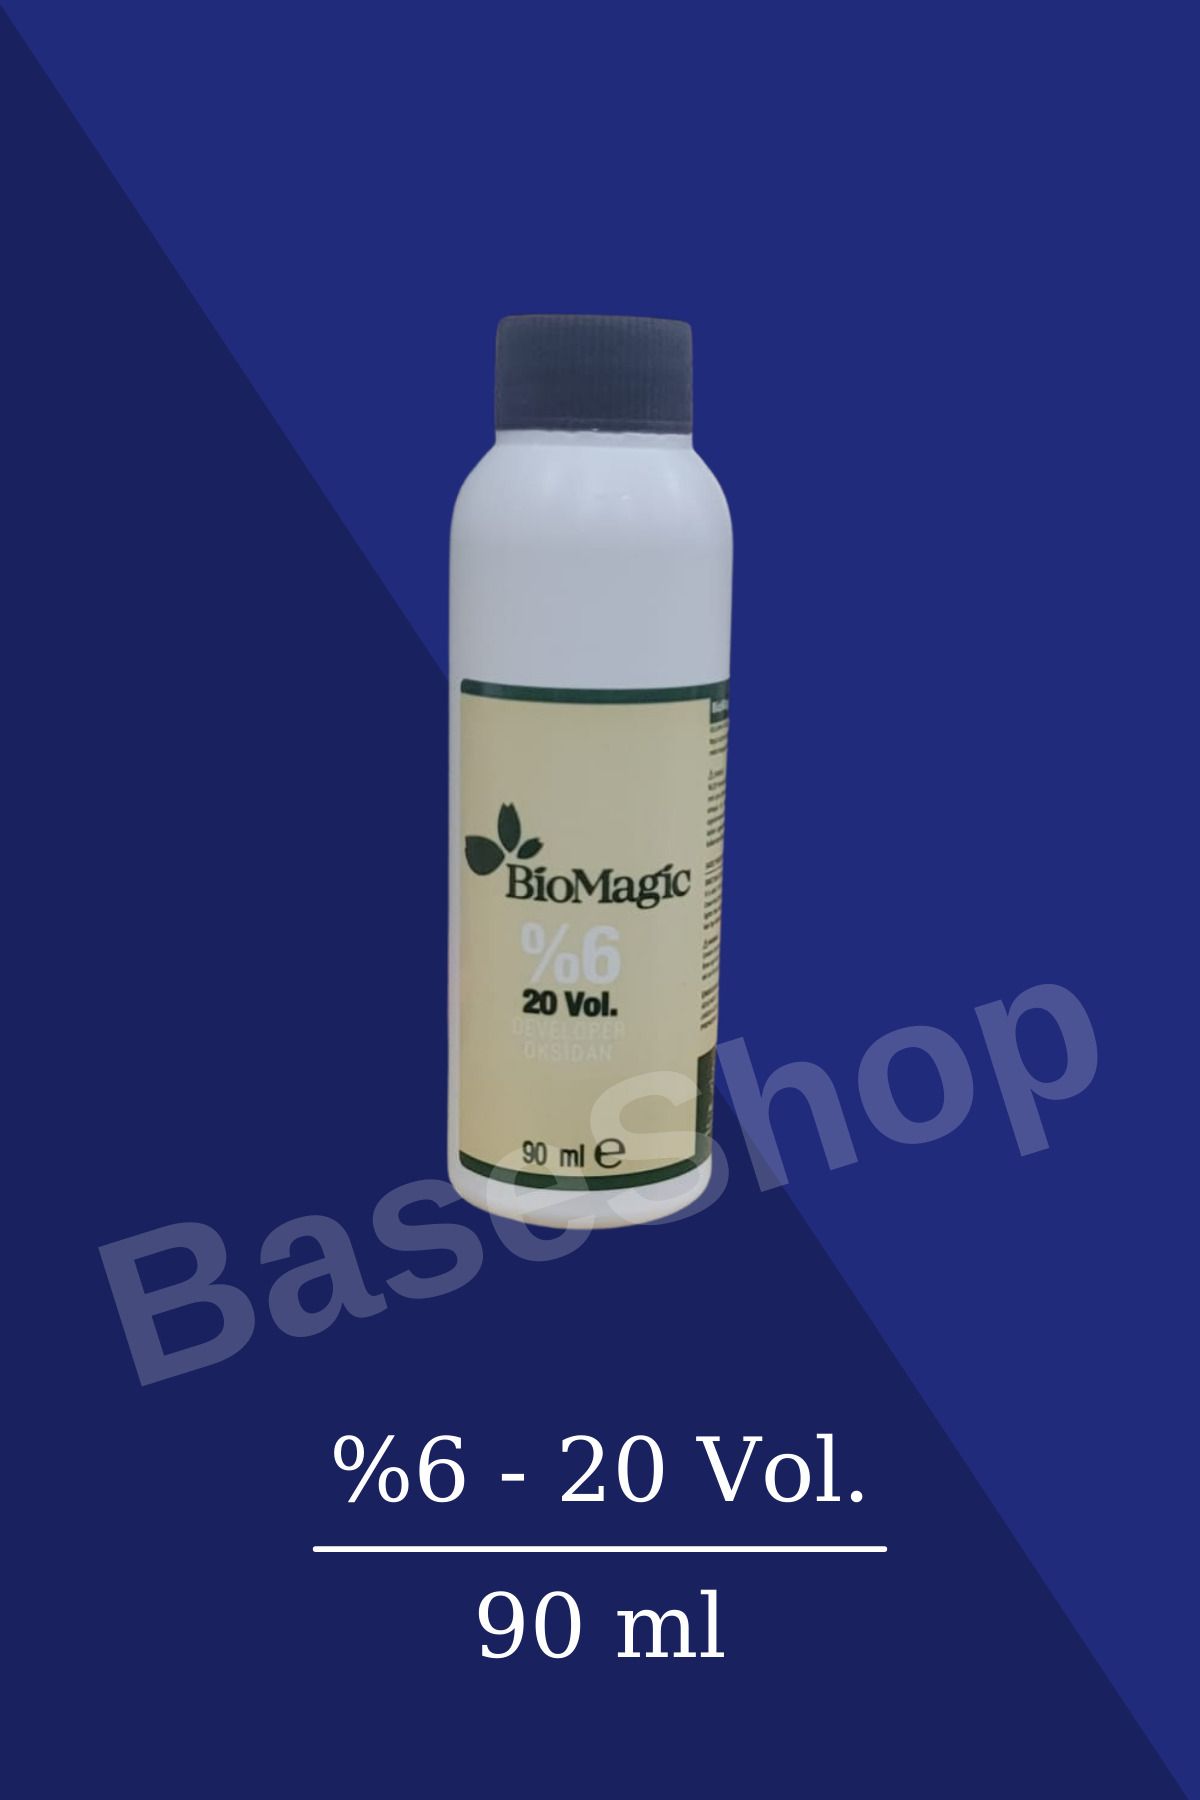 BioMagic Yeni 20 Volum (%6) Developer Oksidan 90 ml (SIVI PEROKSİT)